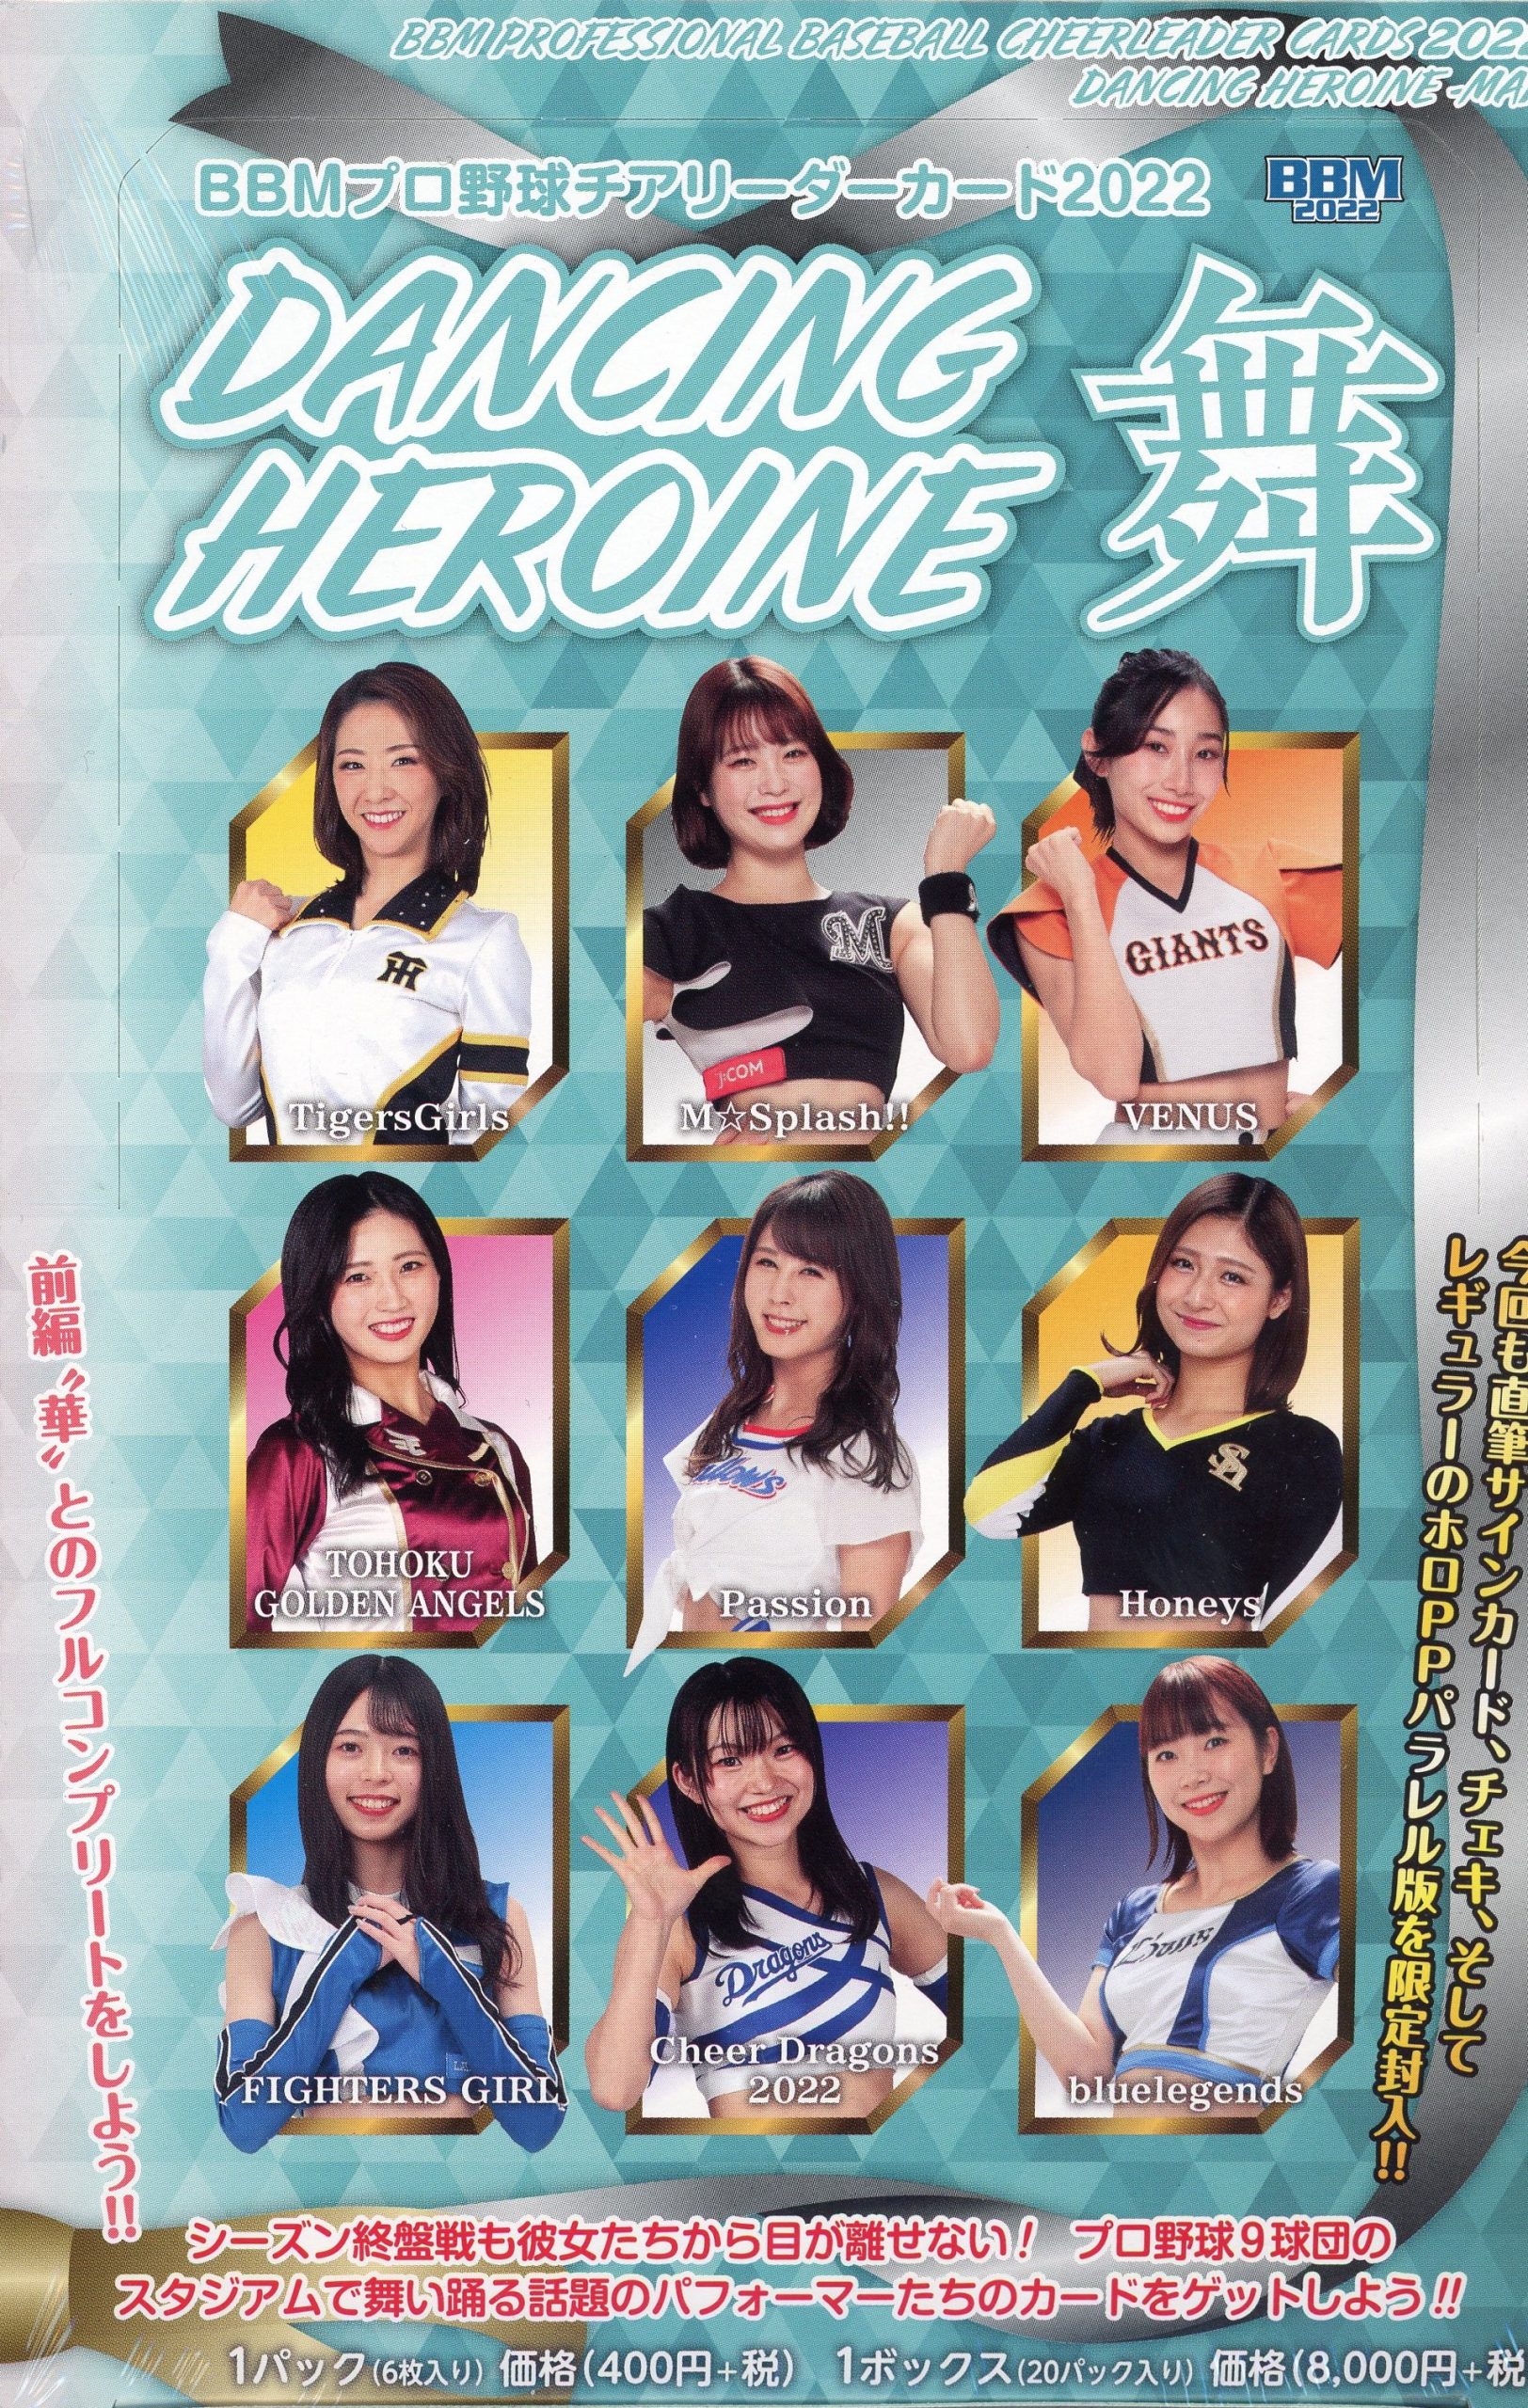 BBM プロ野球チアリーダーカード2022 DANCING HEROINE -舞-【製品情報 